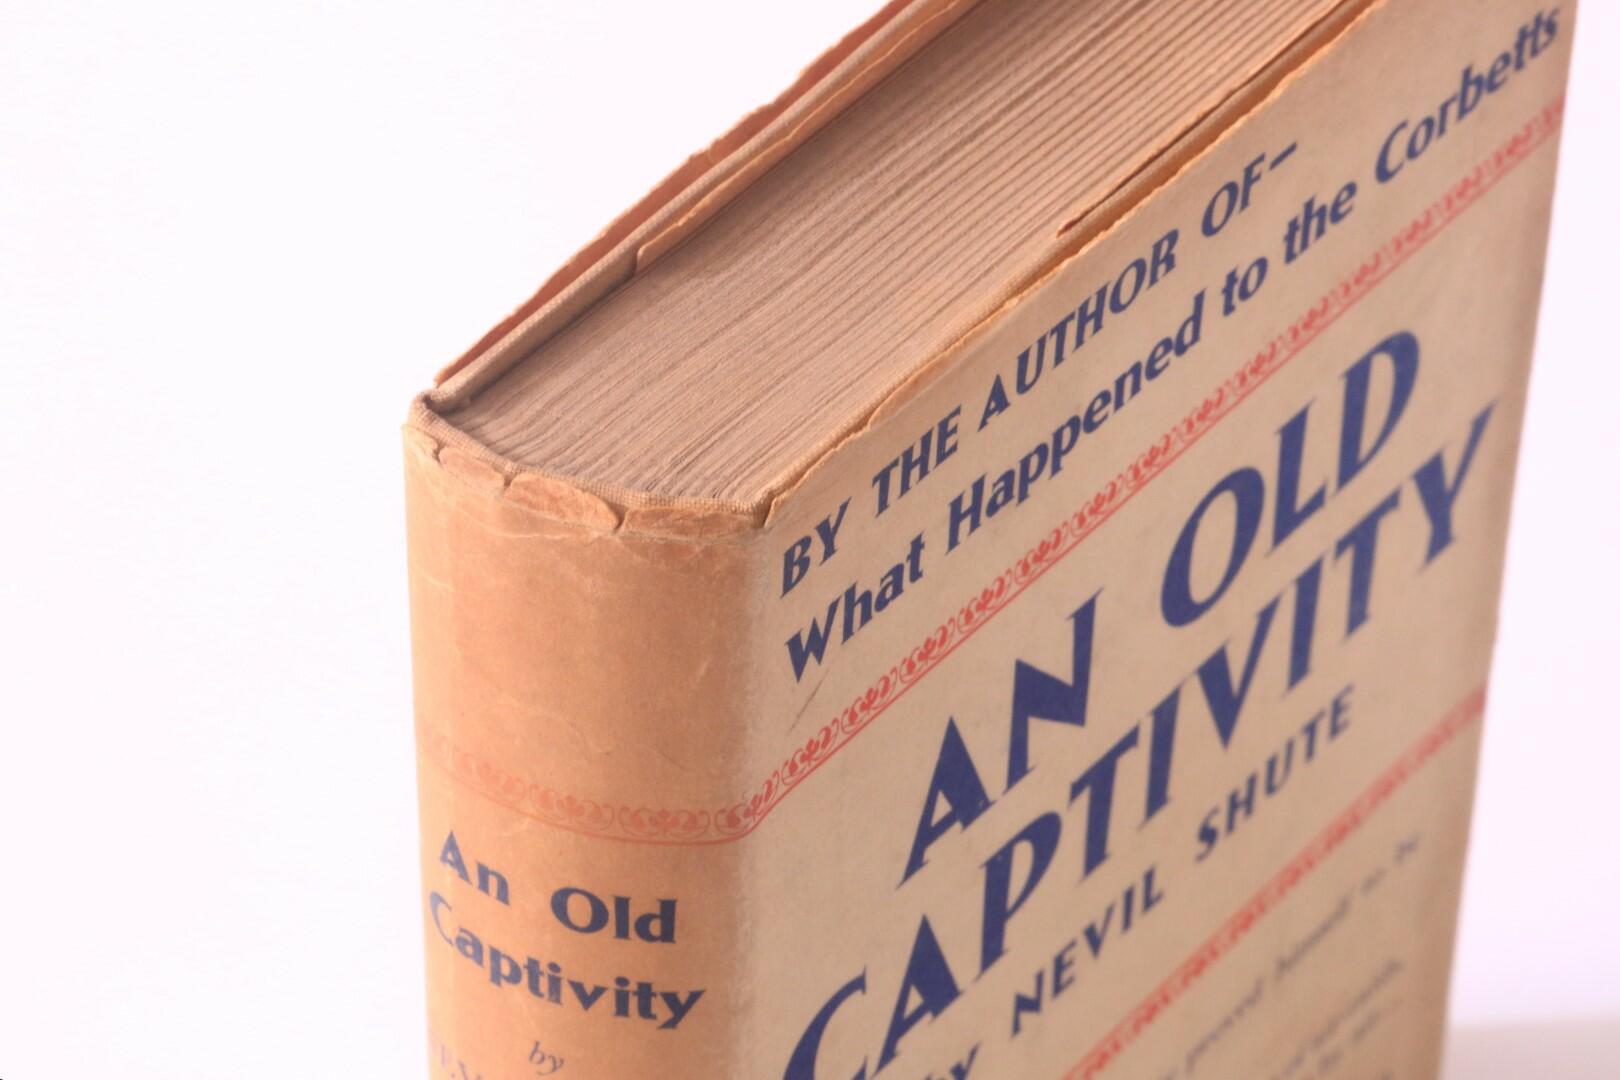 Nevil Shute - An Old Captivity - Heinemann, 1940, First Edition.